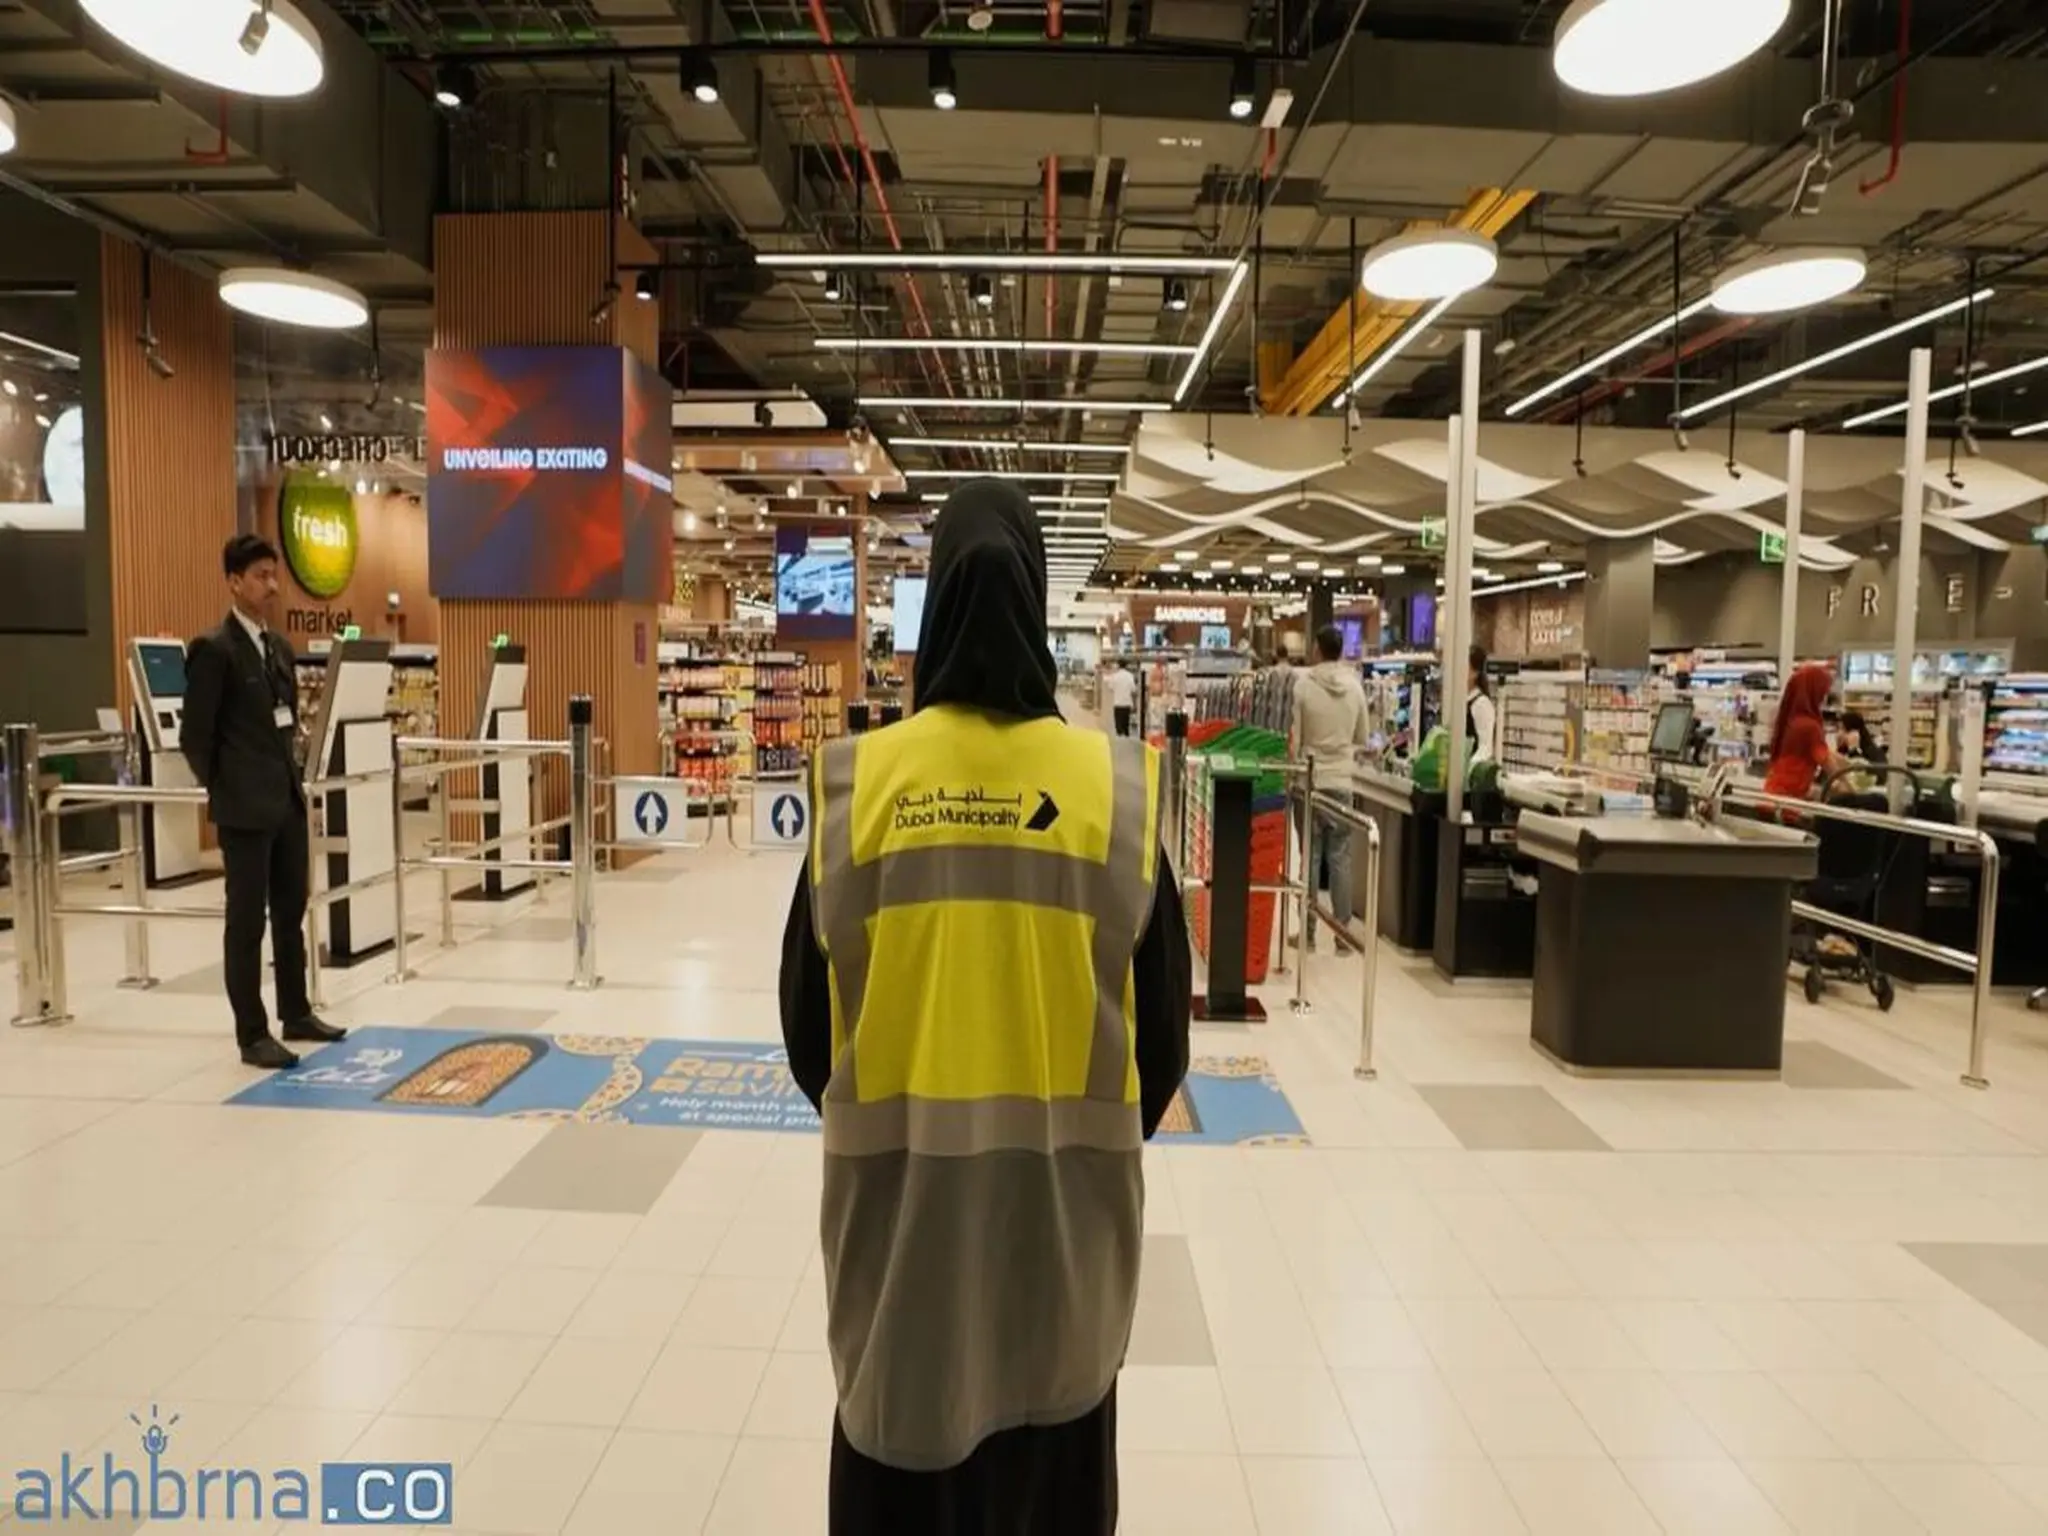 Dubai Intensifies Food Safety Inspections at supermarkets ahead of Ramadan